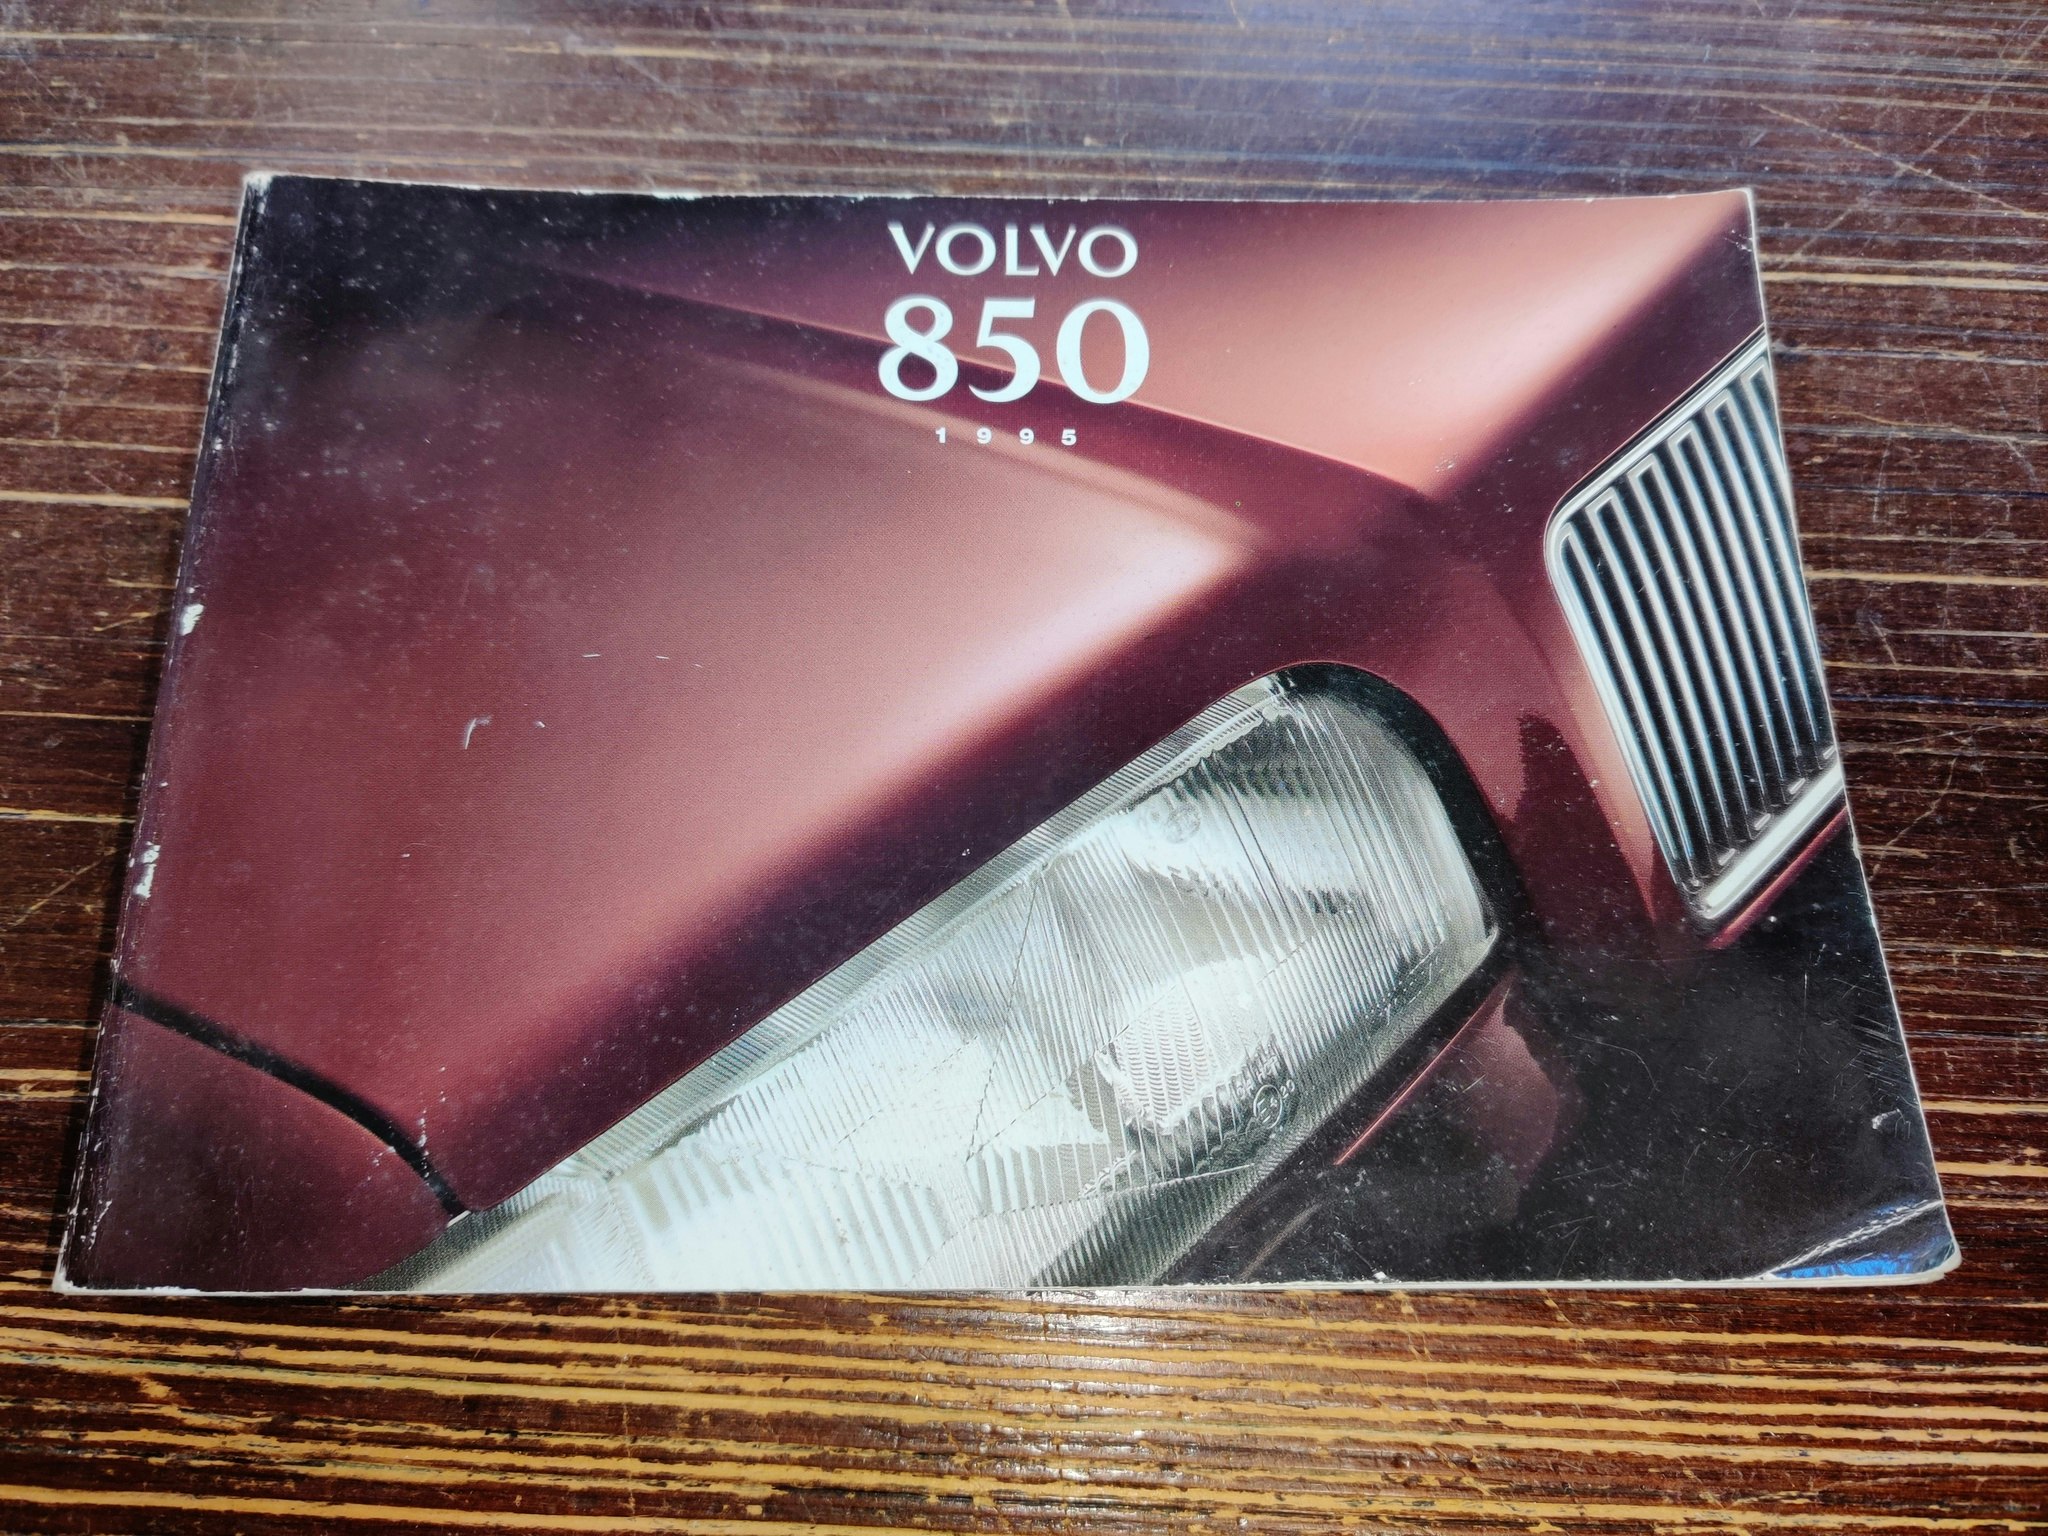 Instruktionsbok - Volvo 850 Tryckt 1995